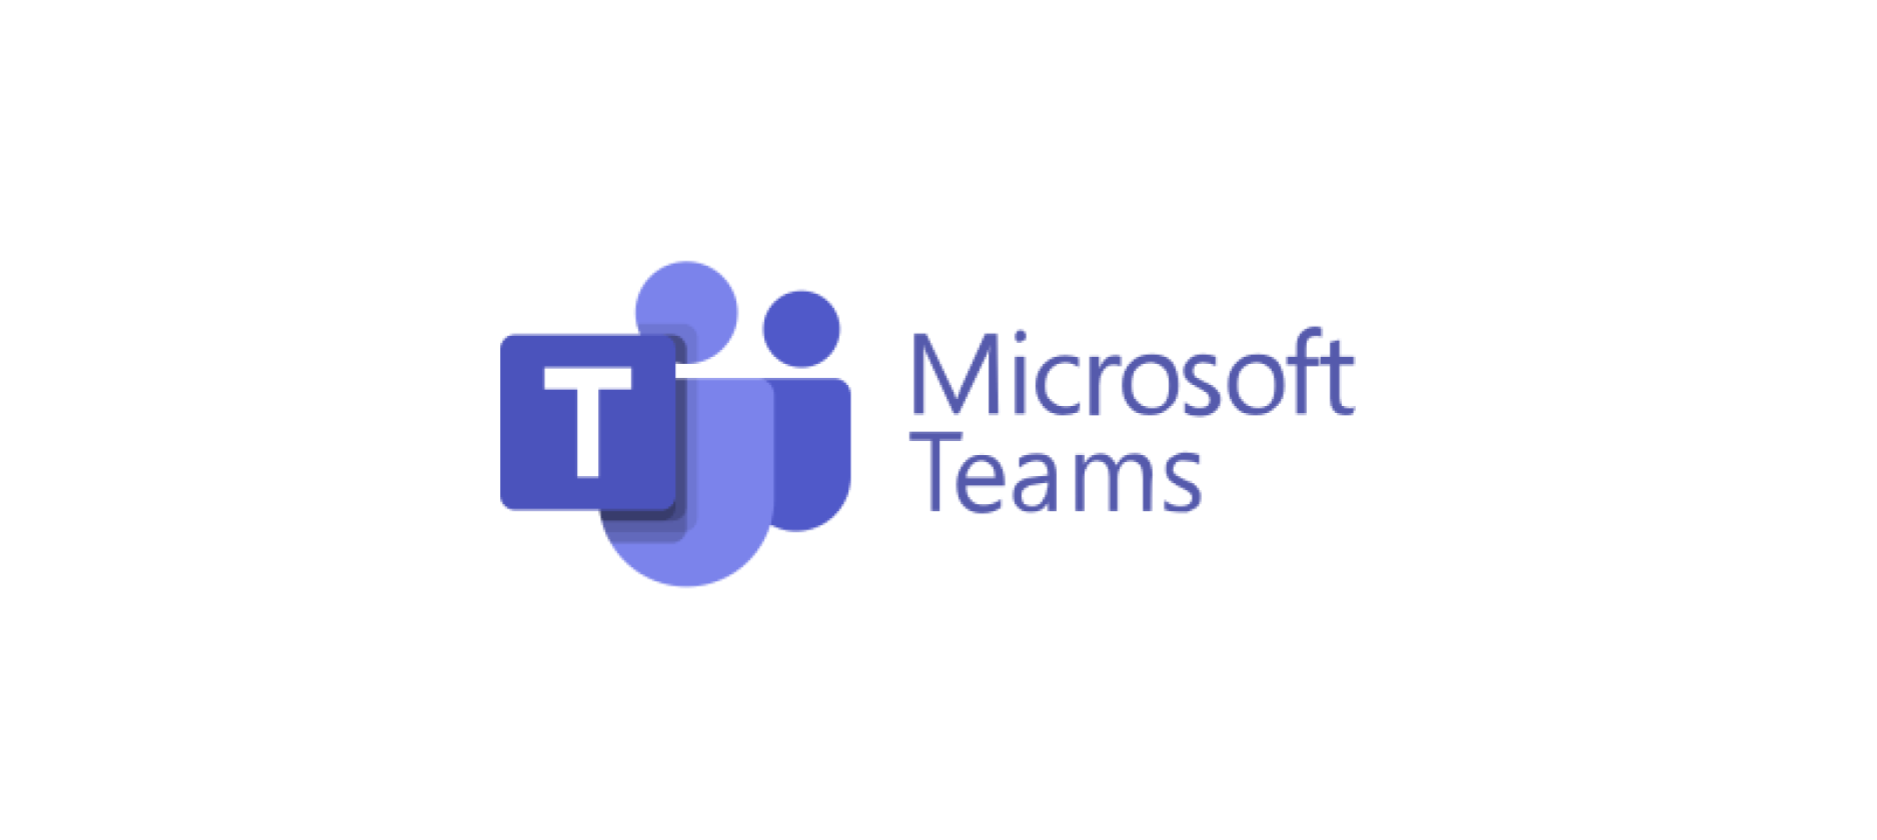 Communication - Microsoft Teams - ready